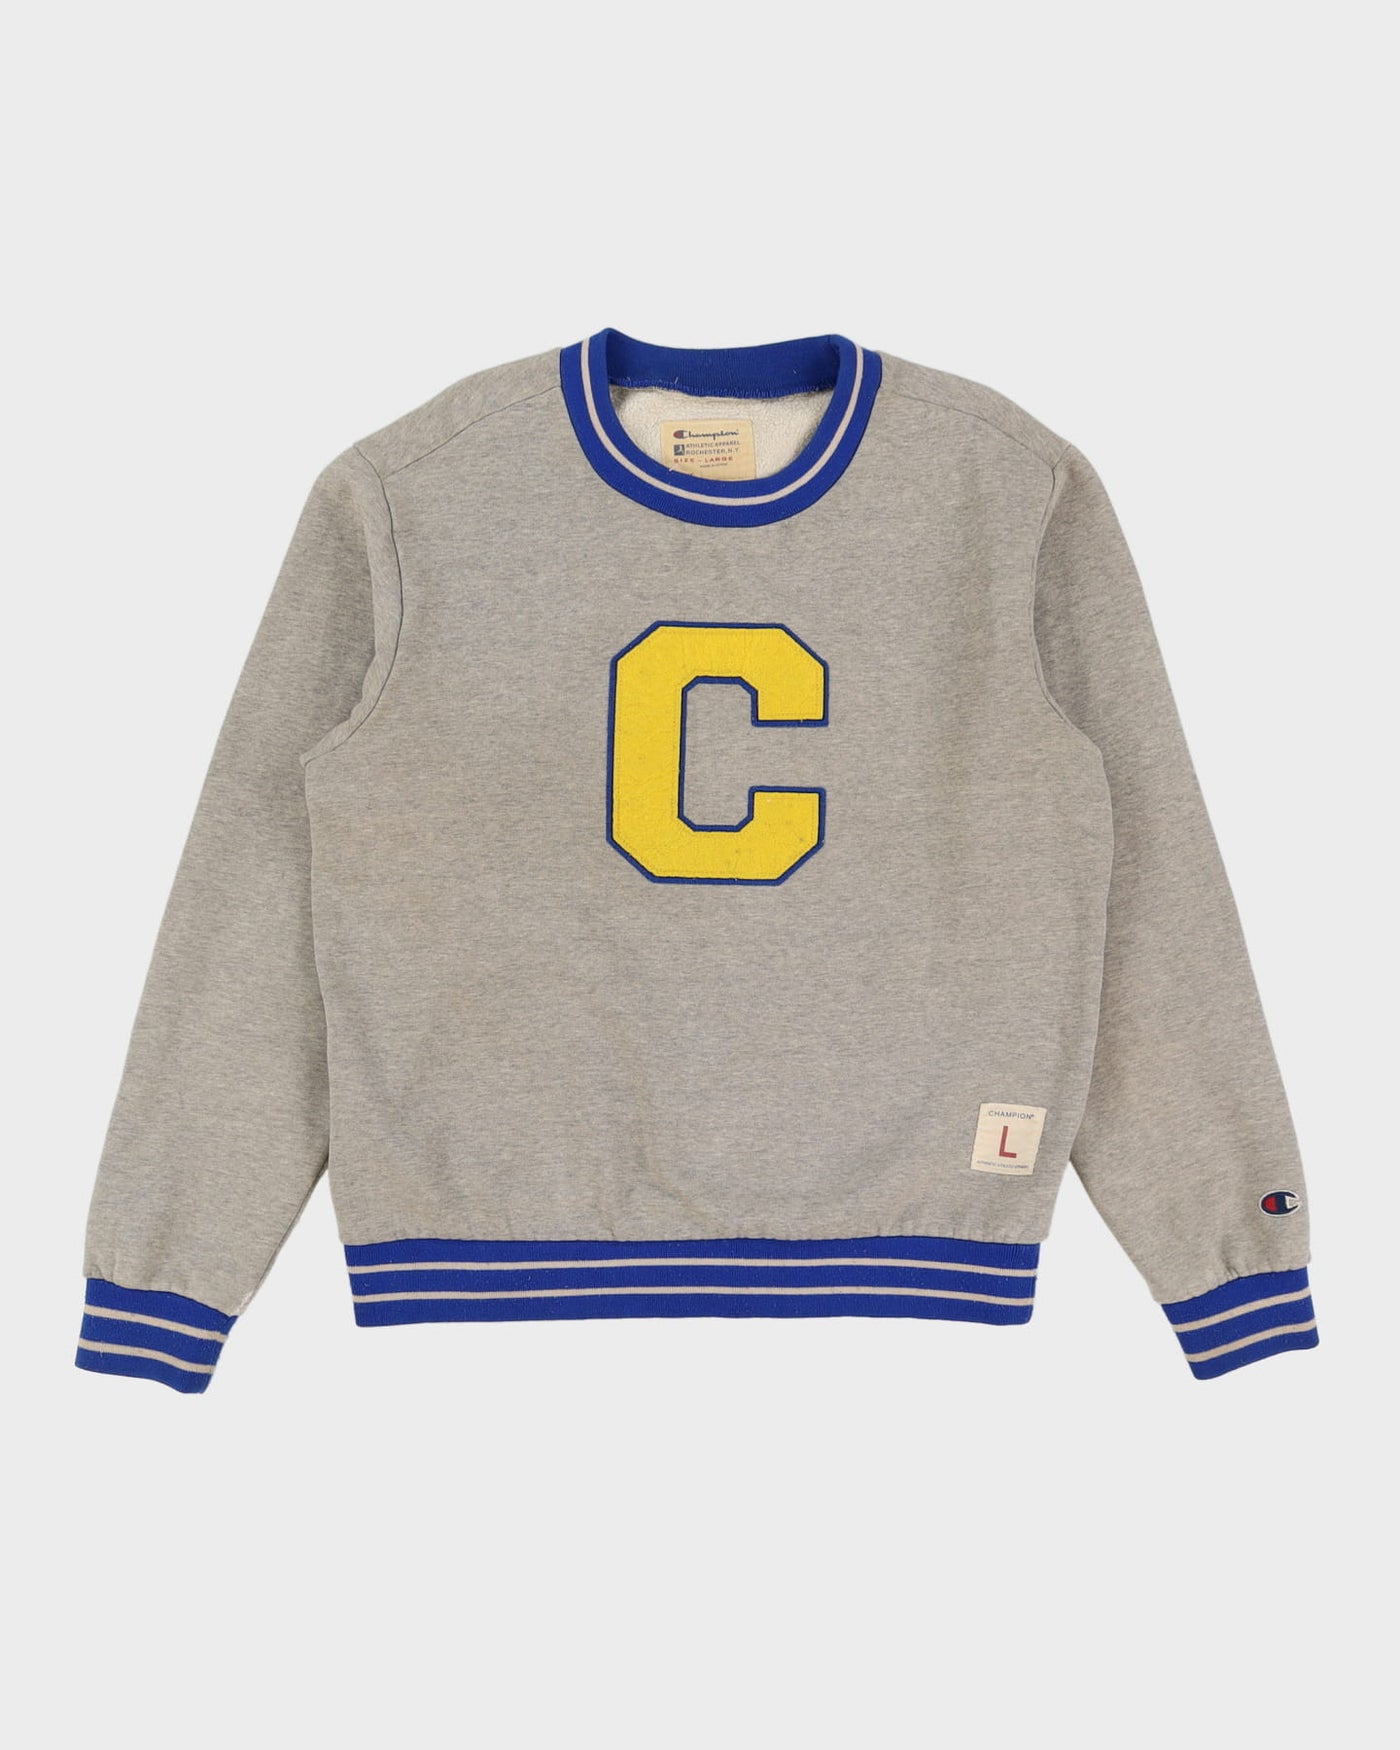 Champion Grey Oversized Varsity / Collegiate Style Sweatshirt - L